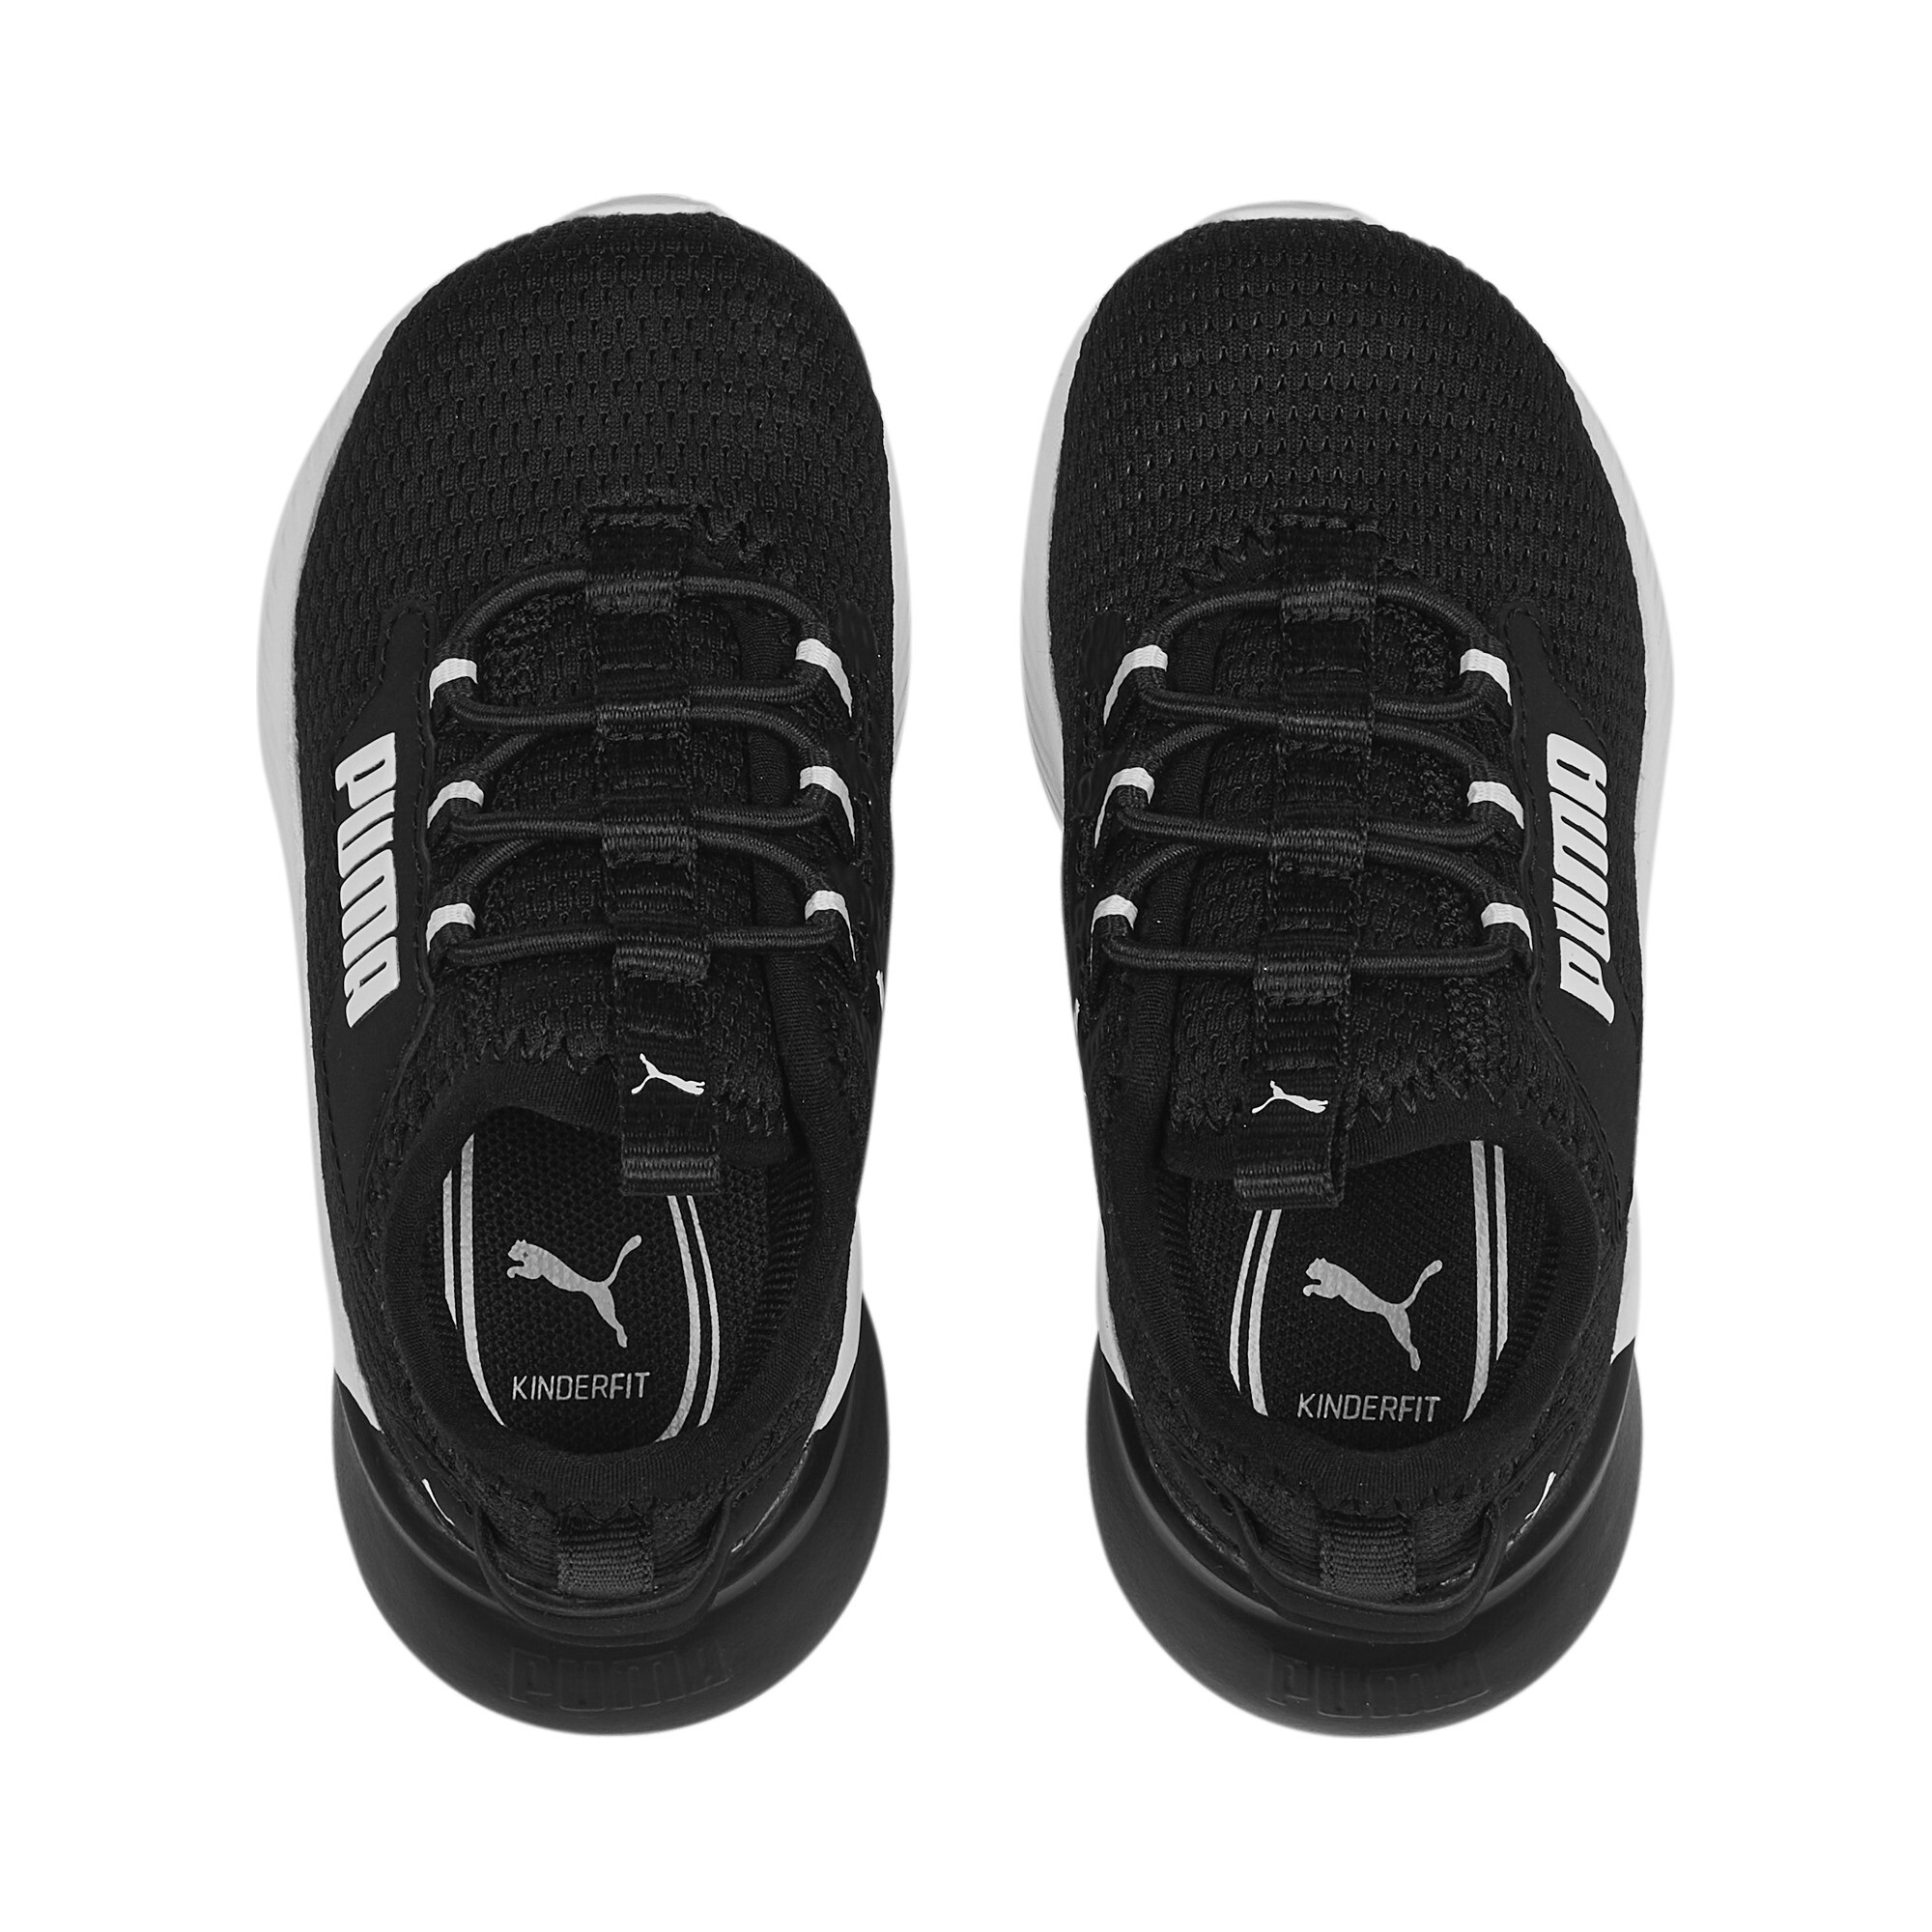 Puma Retaliate 2 AC Sneakers Babies, Black, Size 20, Shoes